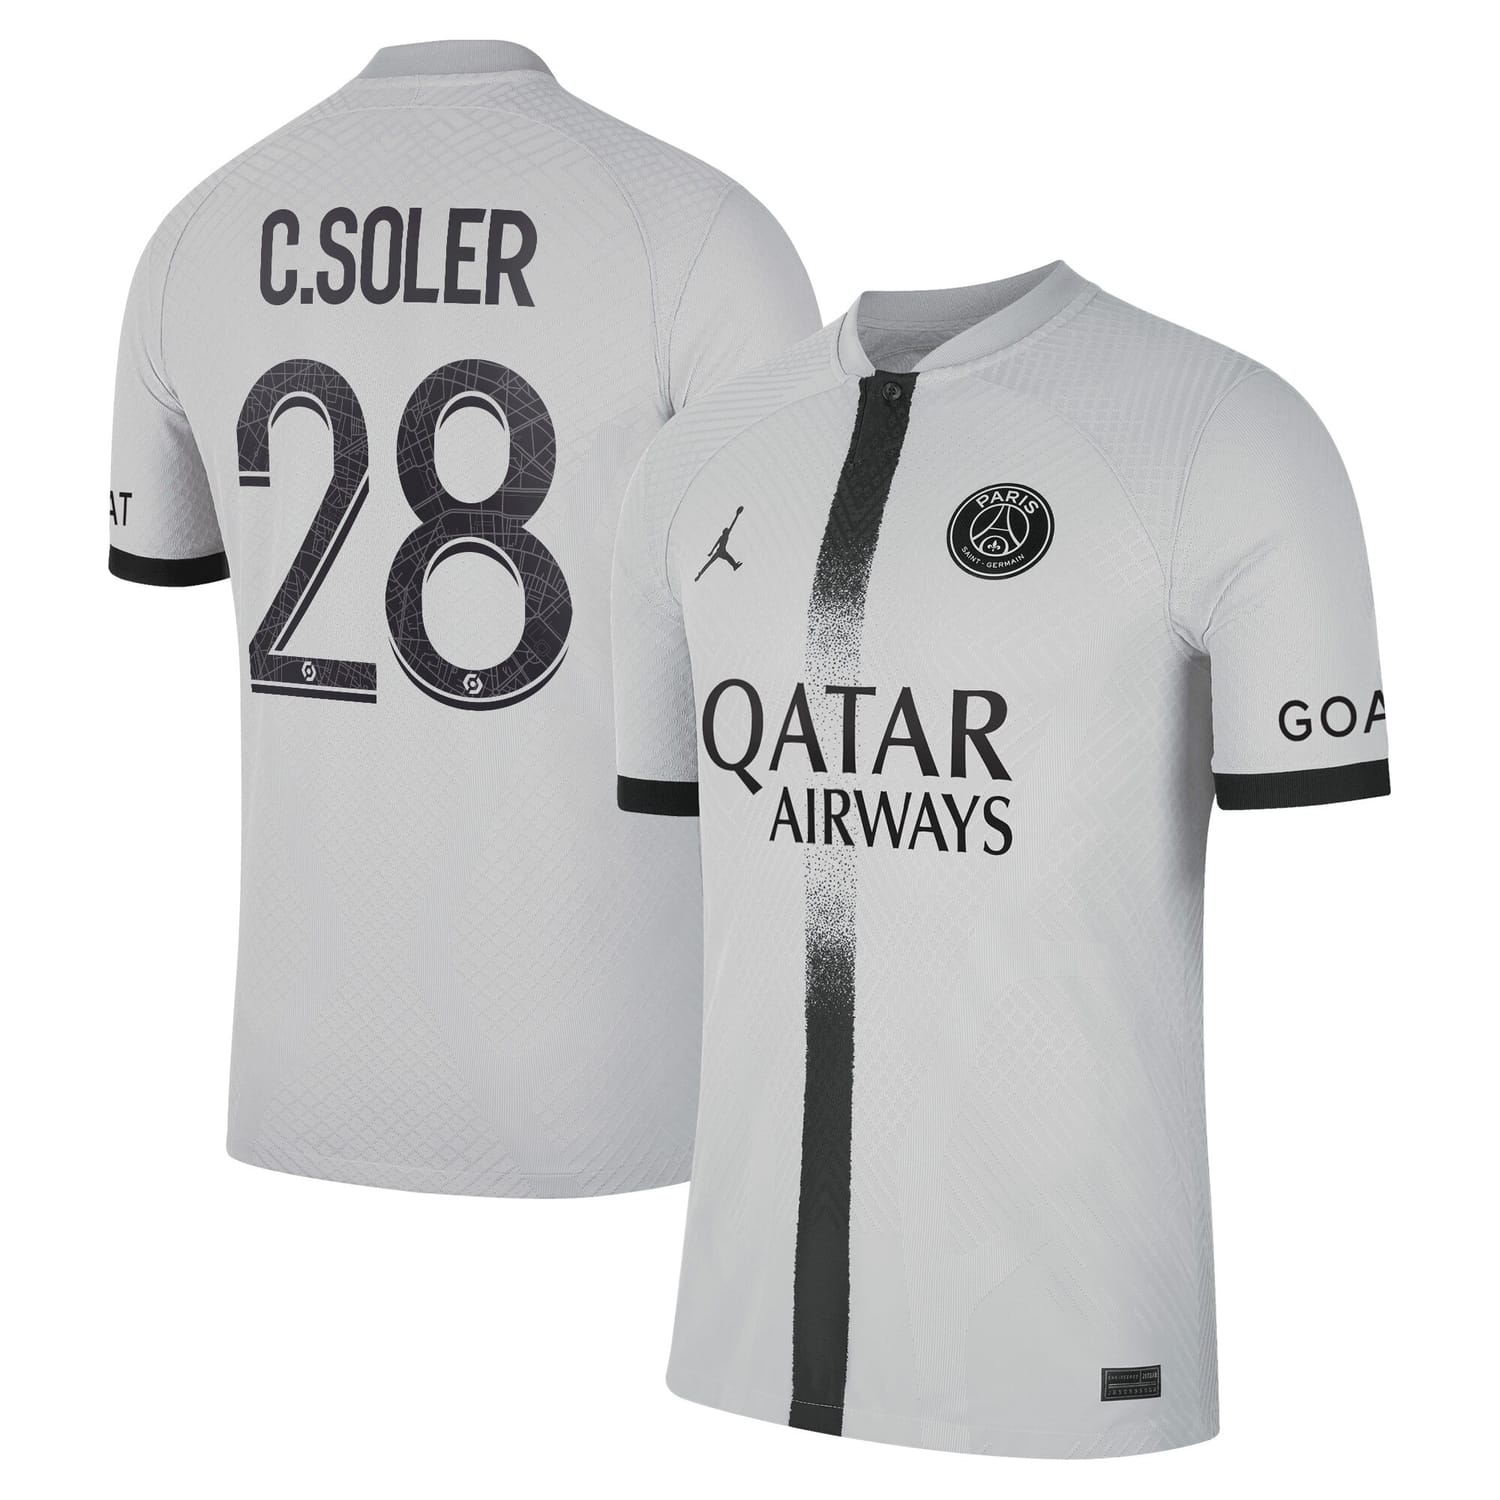 Ligue 1 Paris Saint-Germain Away Authentic Jersey Shirt 2022-23 player Carlos Soler 28 printing for Men